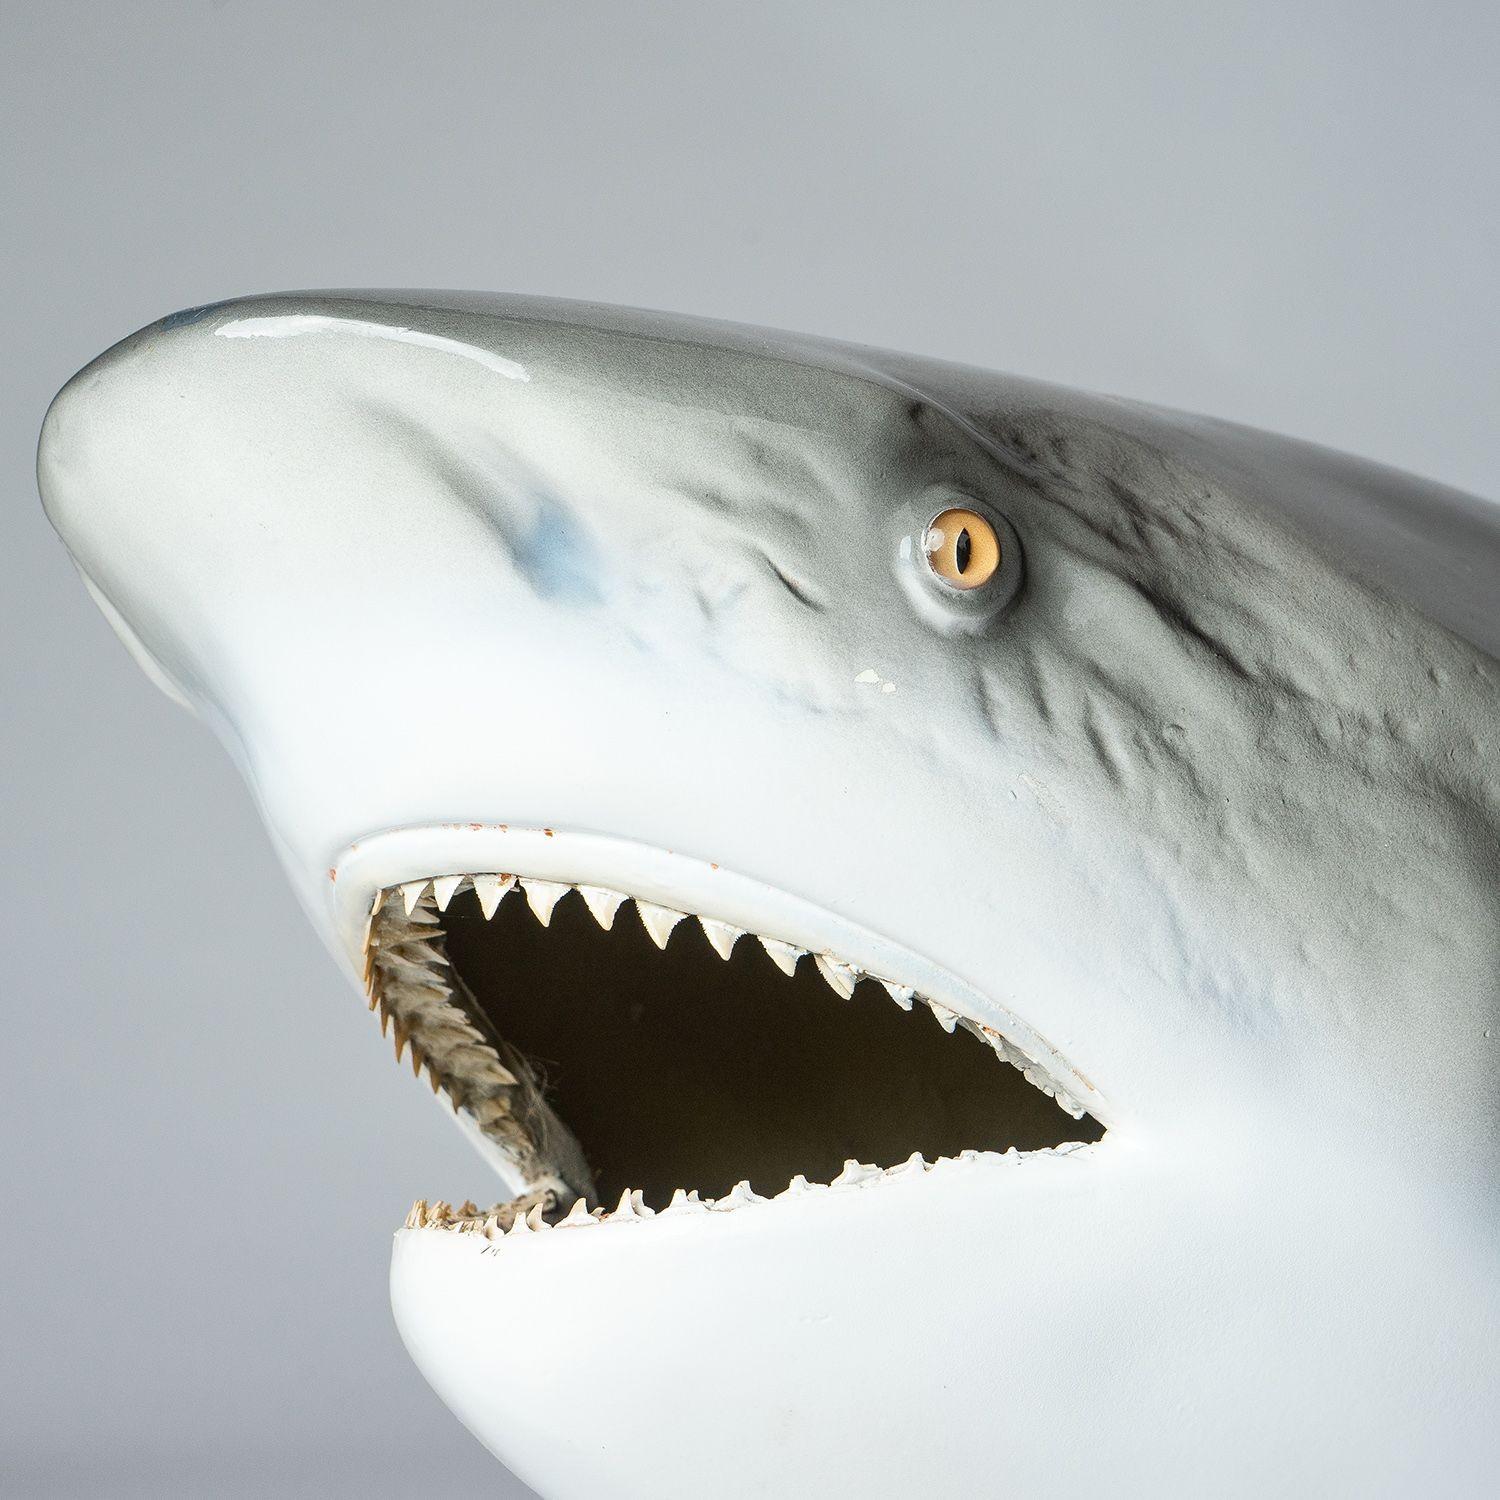 Fiberglass Vintage Museum-Quality Life-Size Model of a Bull Shark